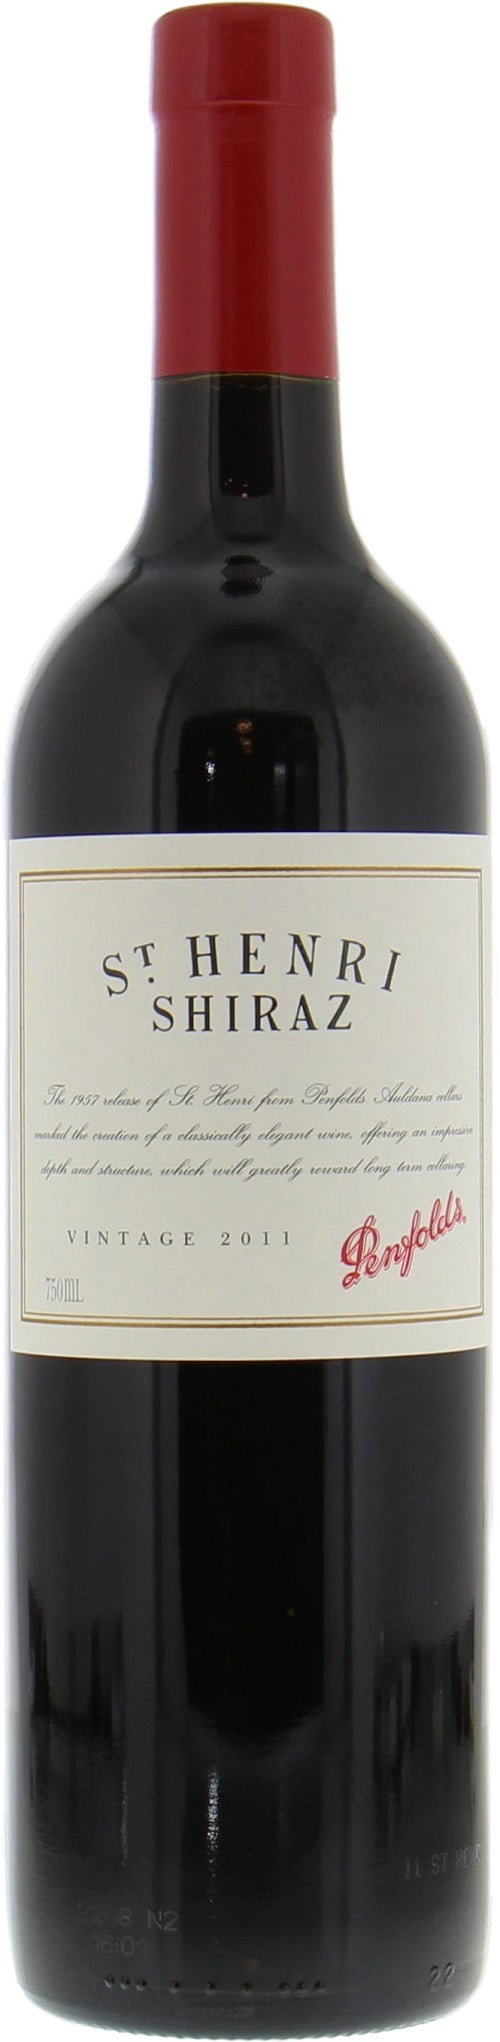 Penfolds St Henri 2011 Shiraz Wine